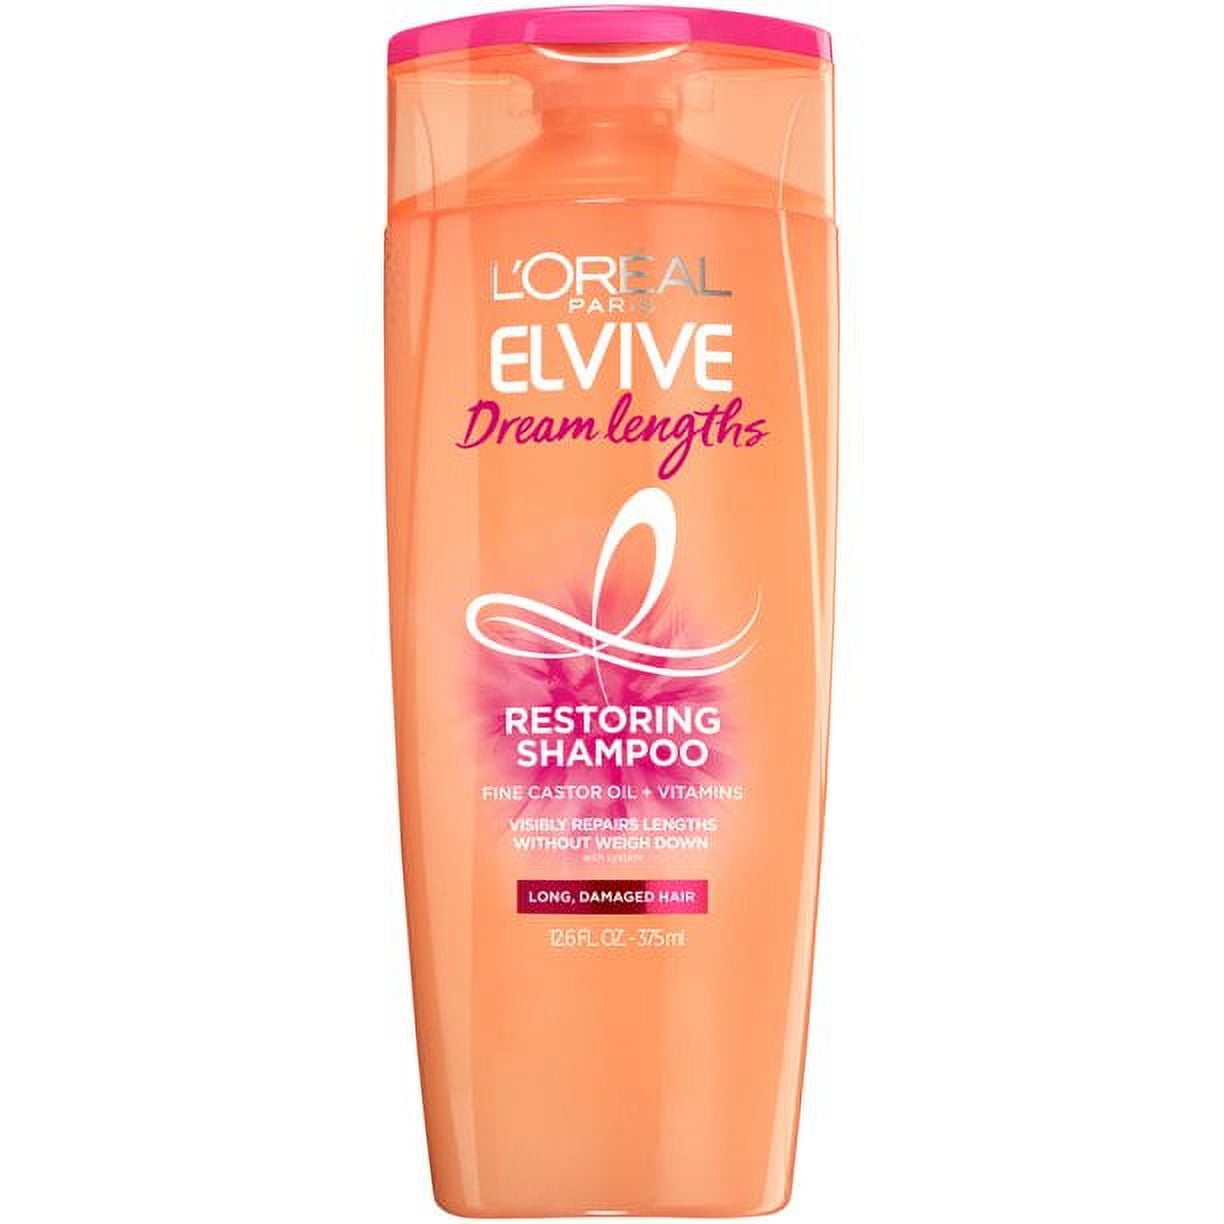 L'Oreal Paris Elvive Dream Lengths Restoring Shampoo, 13.5 fl oz